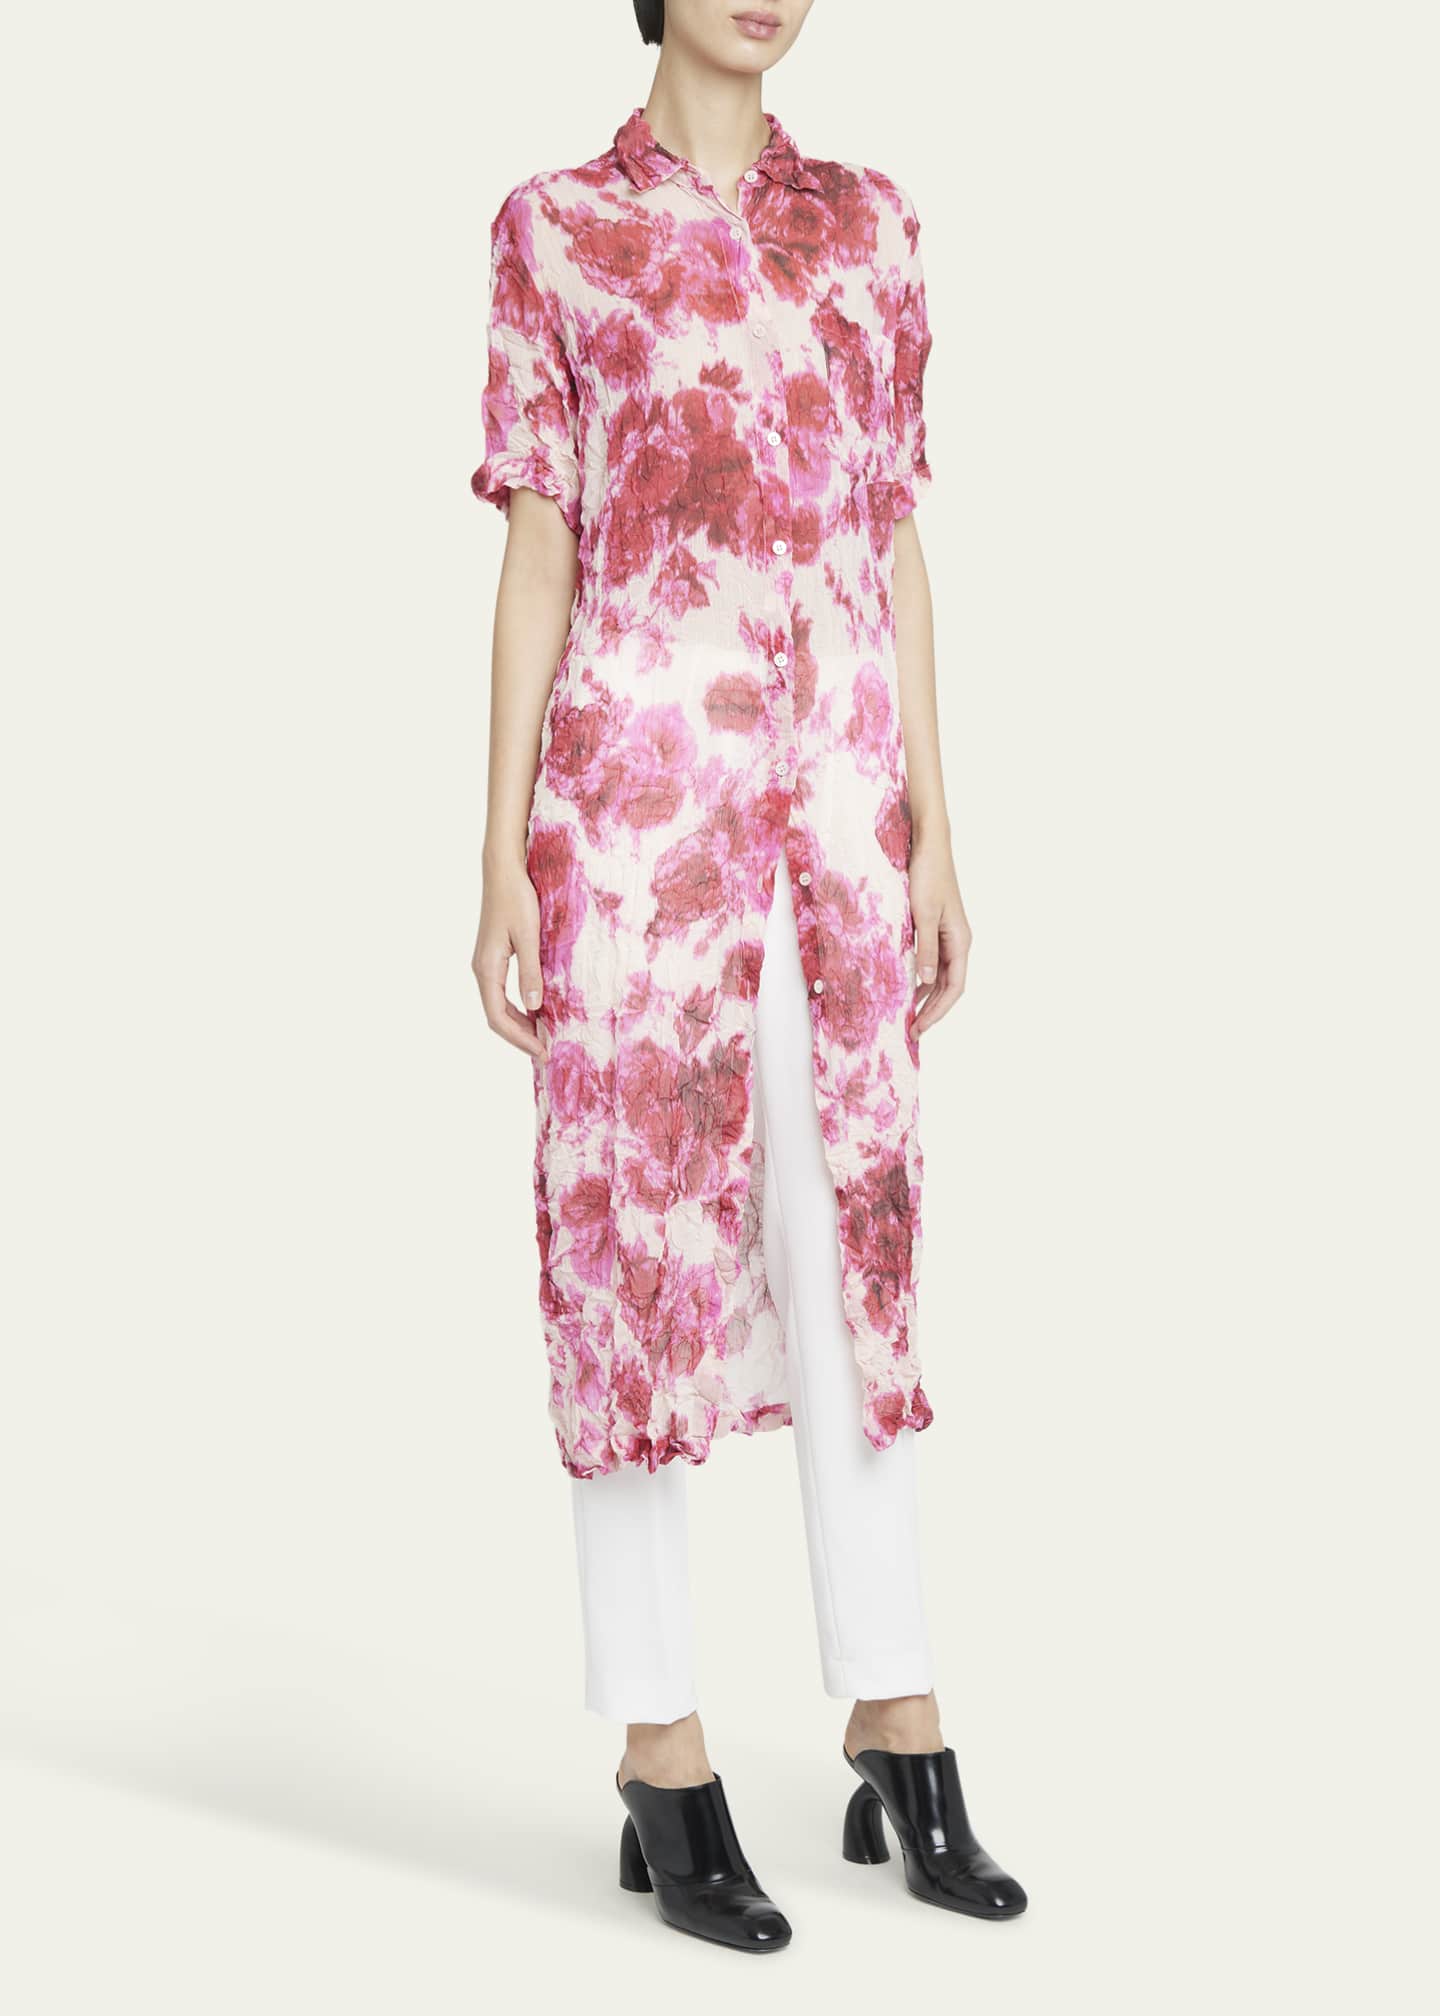 Dries Van Noten Dush Floral-Print Crinkle Shirtdress - Bergdorf Goodman